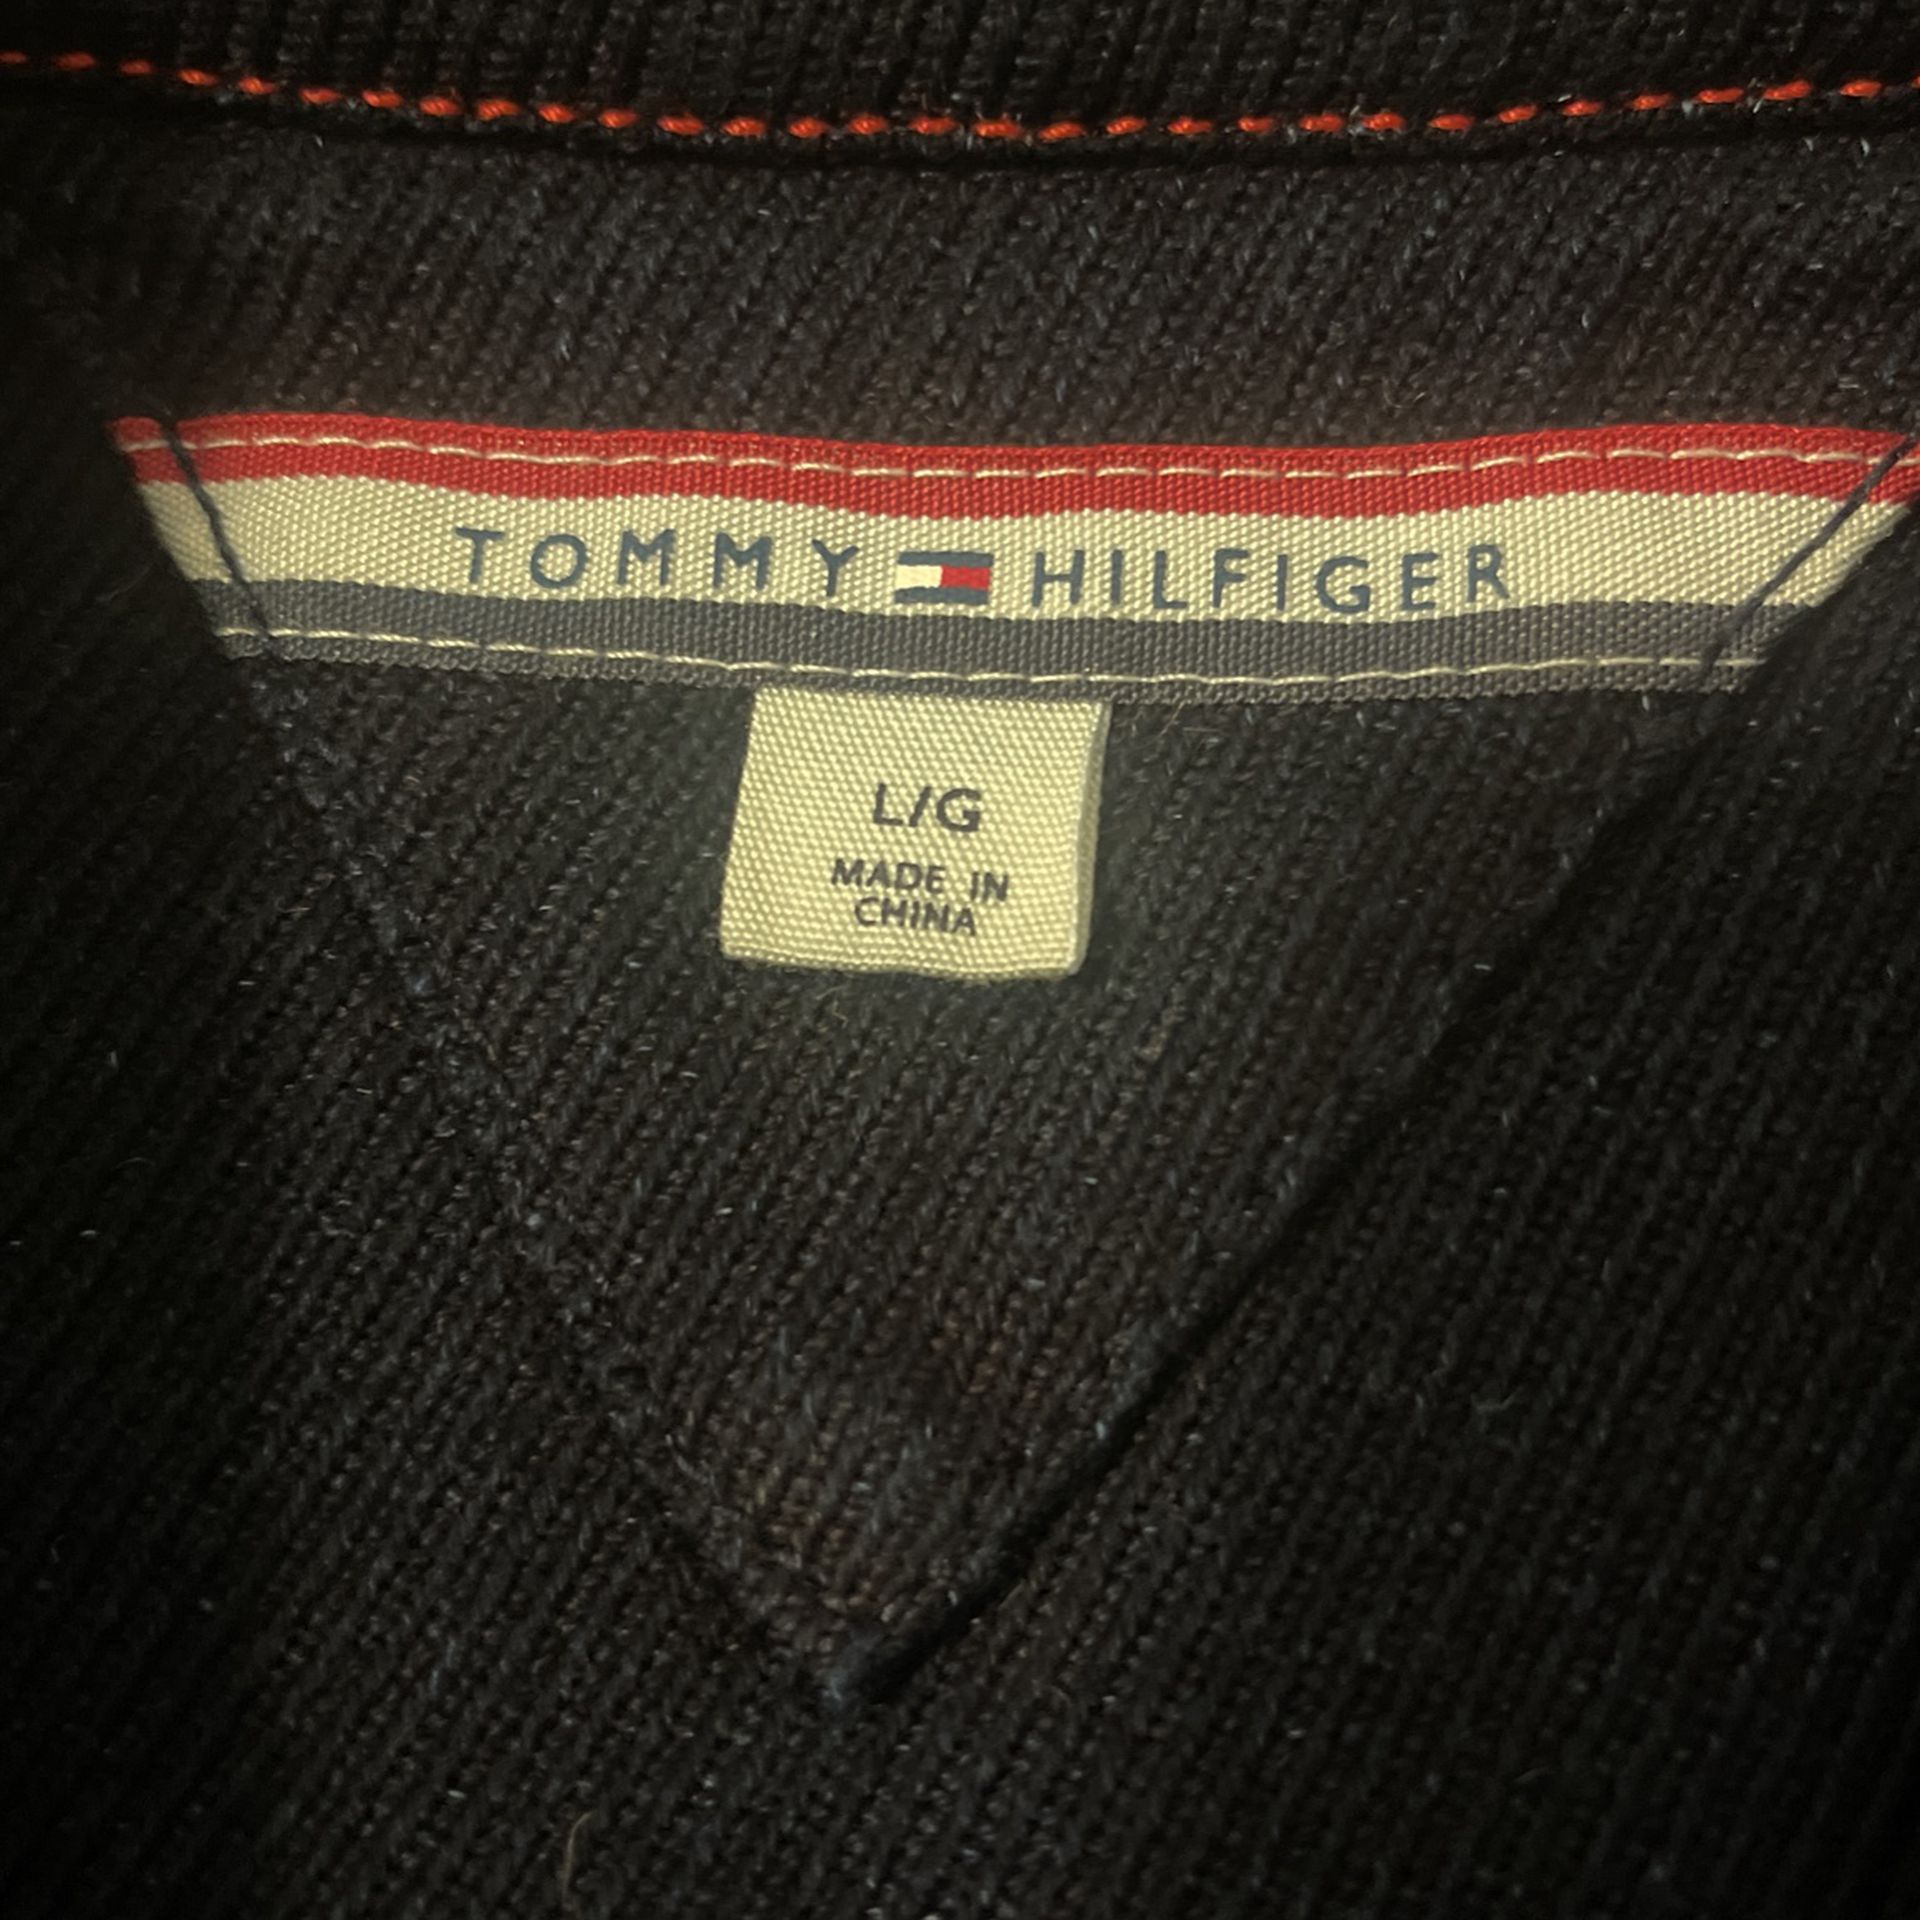 Tommy Hilfiger Men’s Peacoat Styled Jacket. 